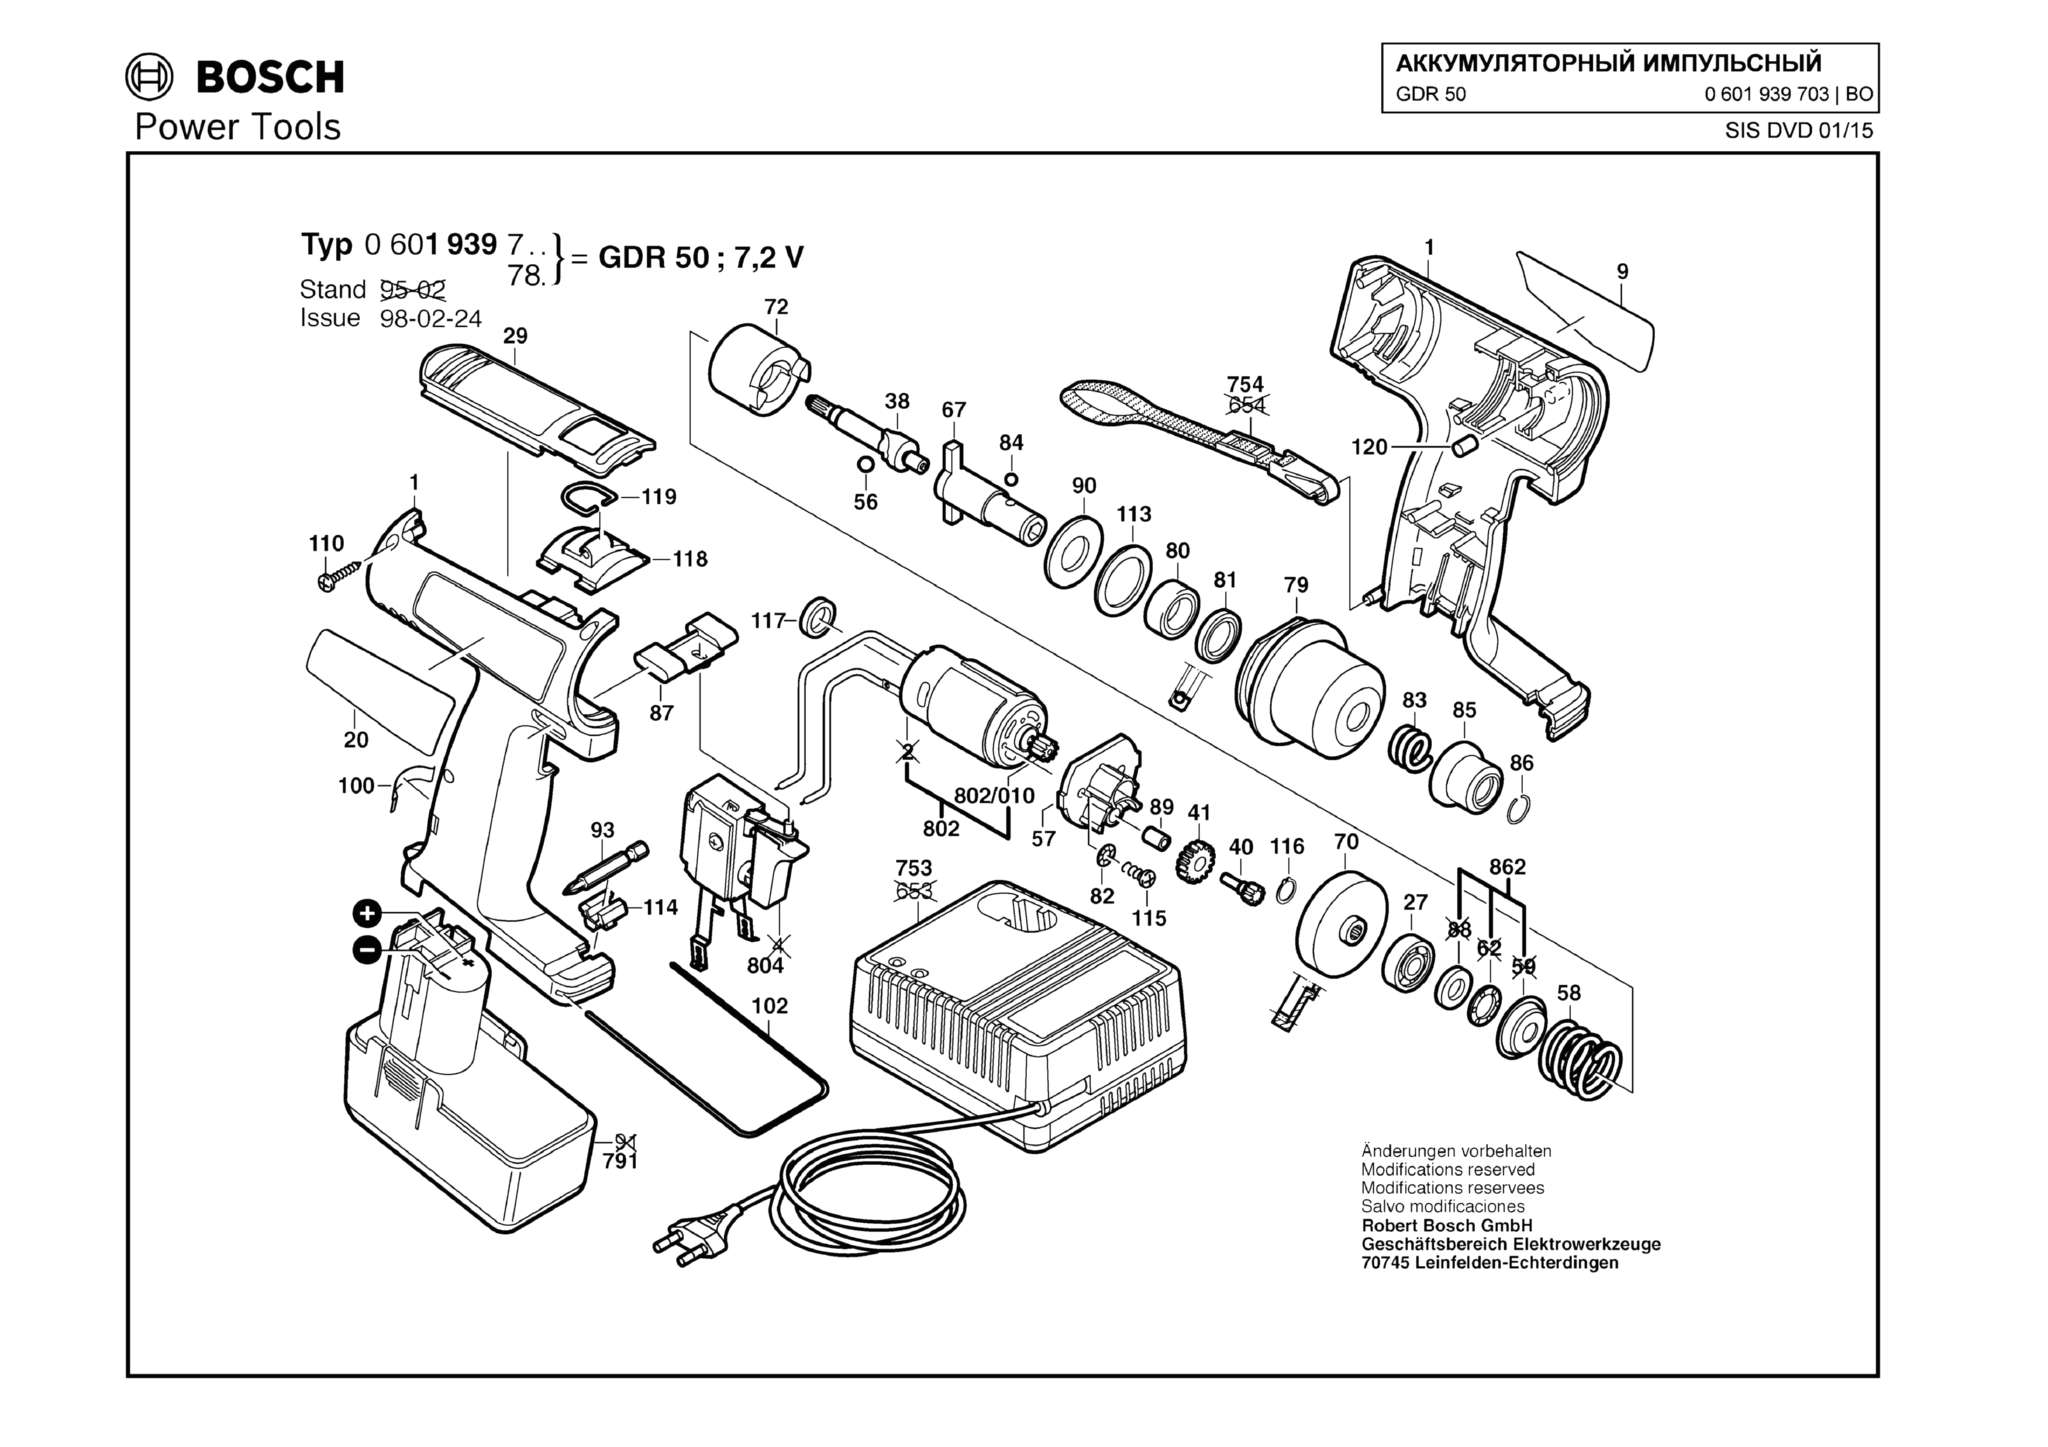 Запчасти, схема и деталировка Bosch GDR 50 (ТИП 0601939703)